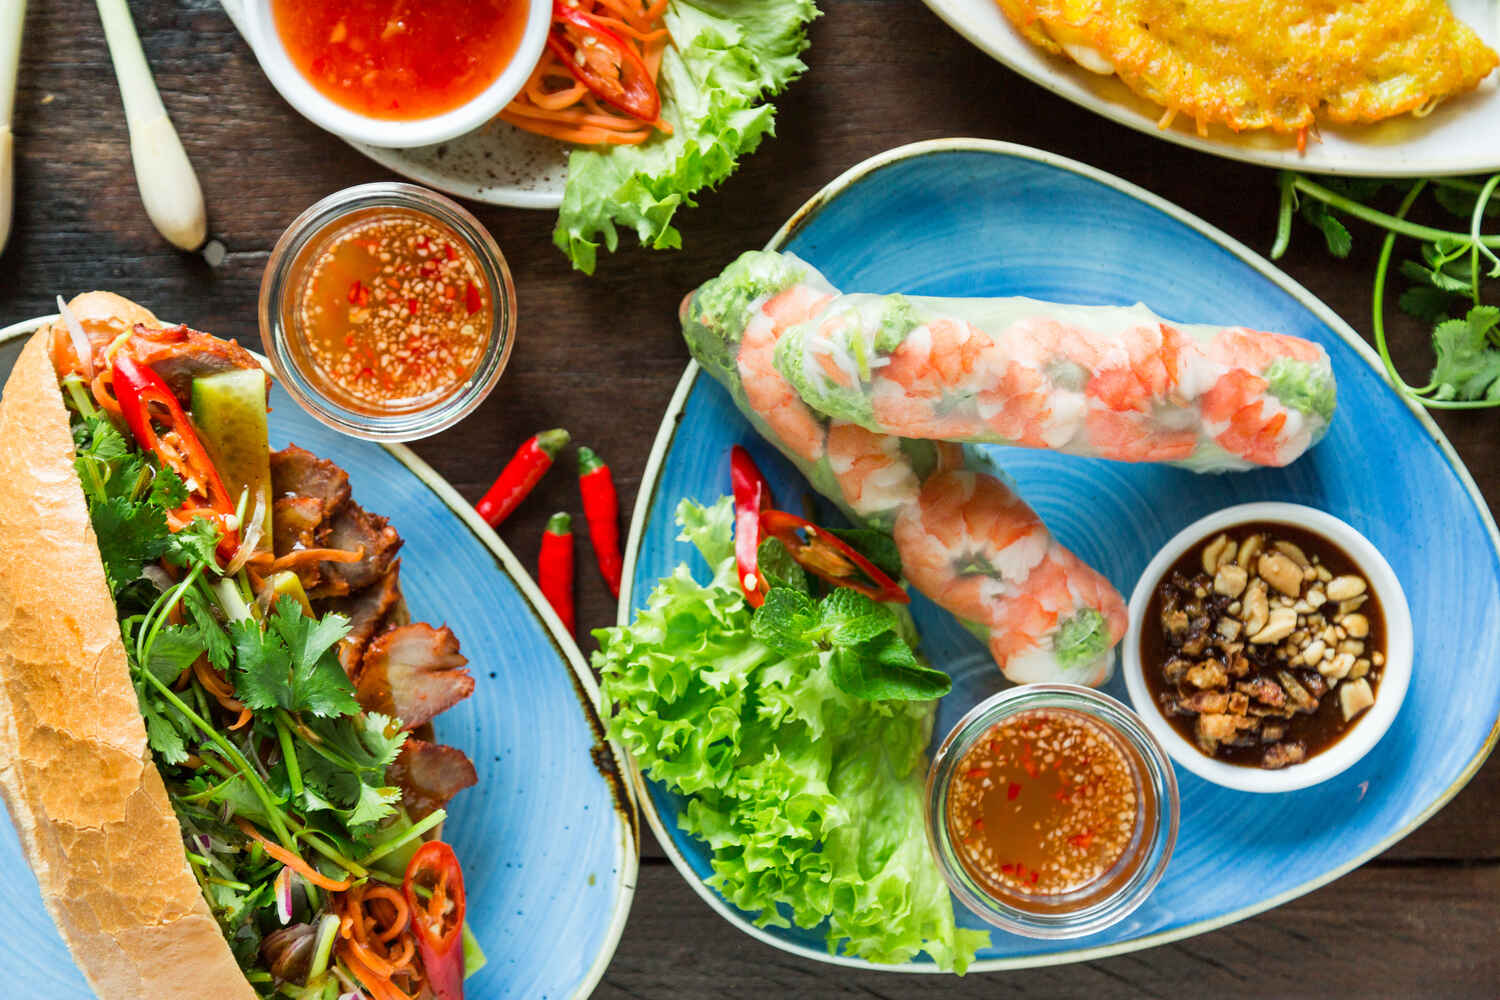 15 Best Restaurants in Da Nang to Try